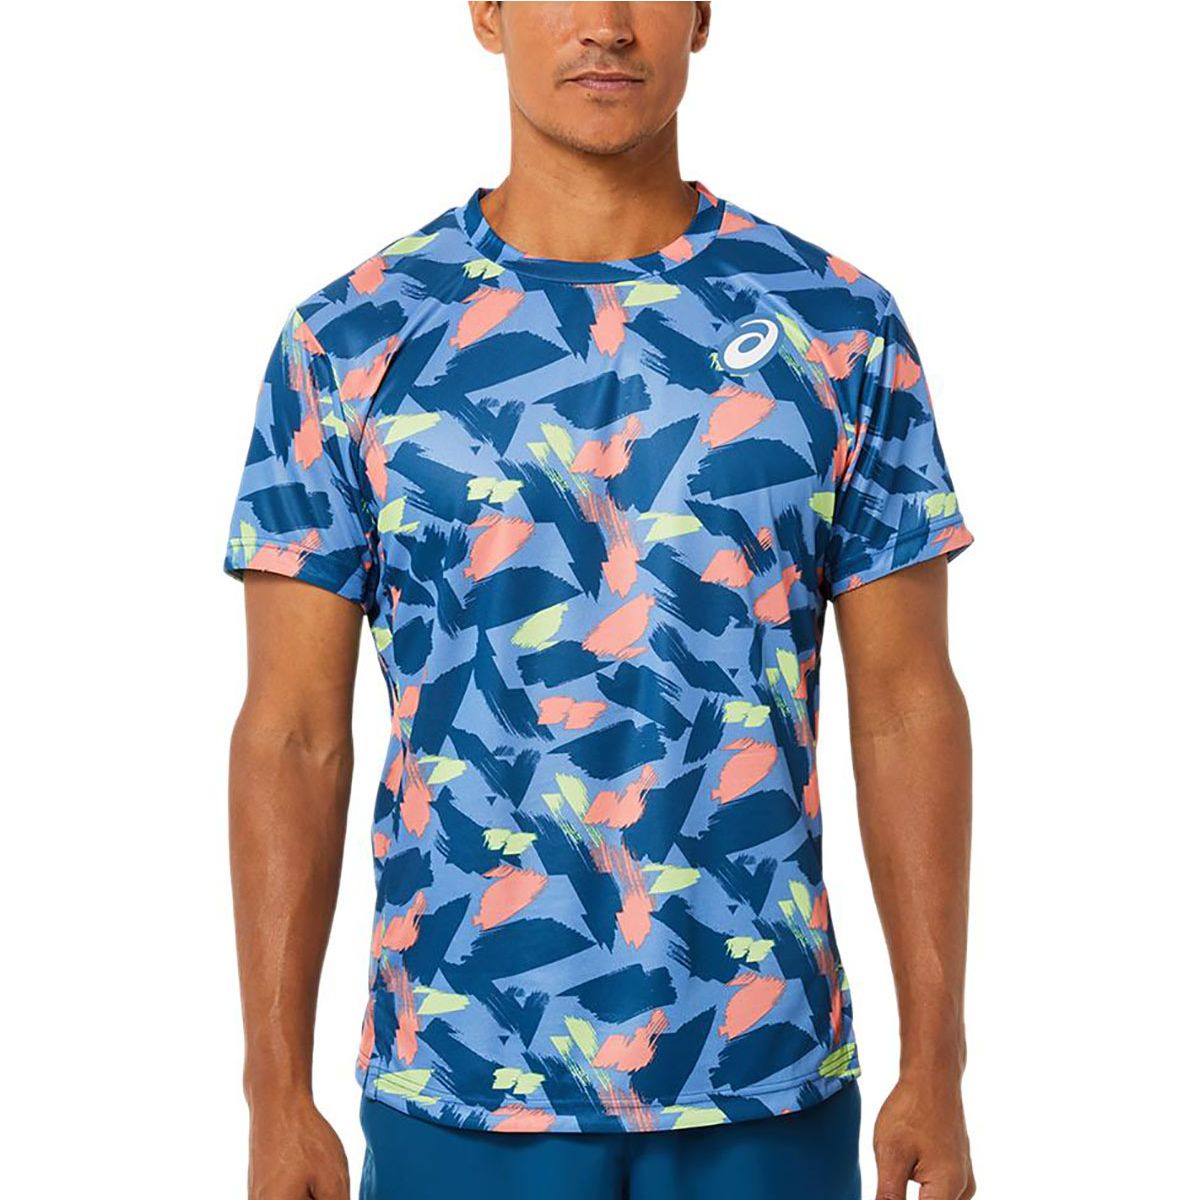 etc. Feudal Velocidad supersónica Asics Match Graphic Men's Tennis T-Shirt 2041A191-401